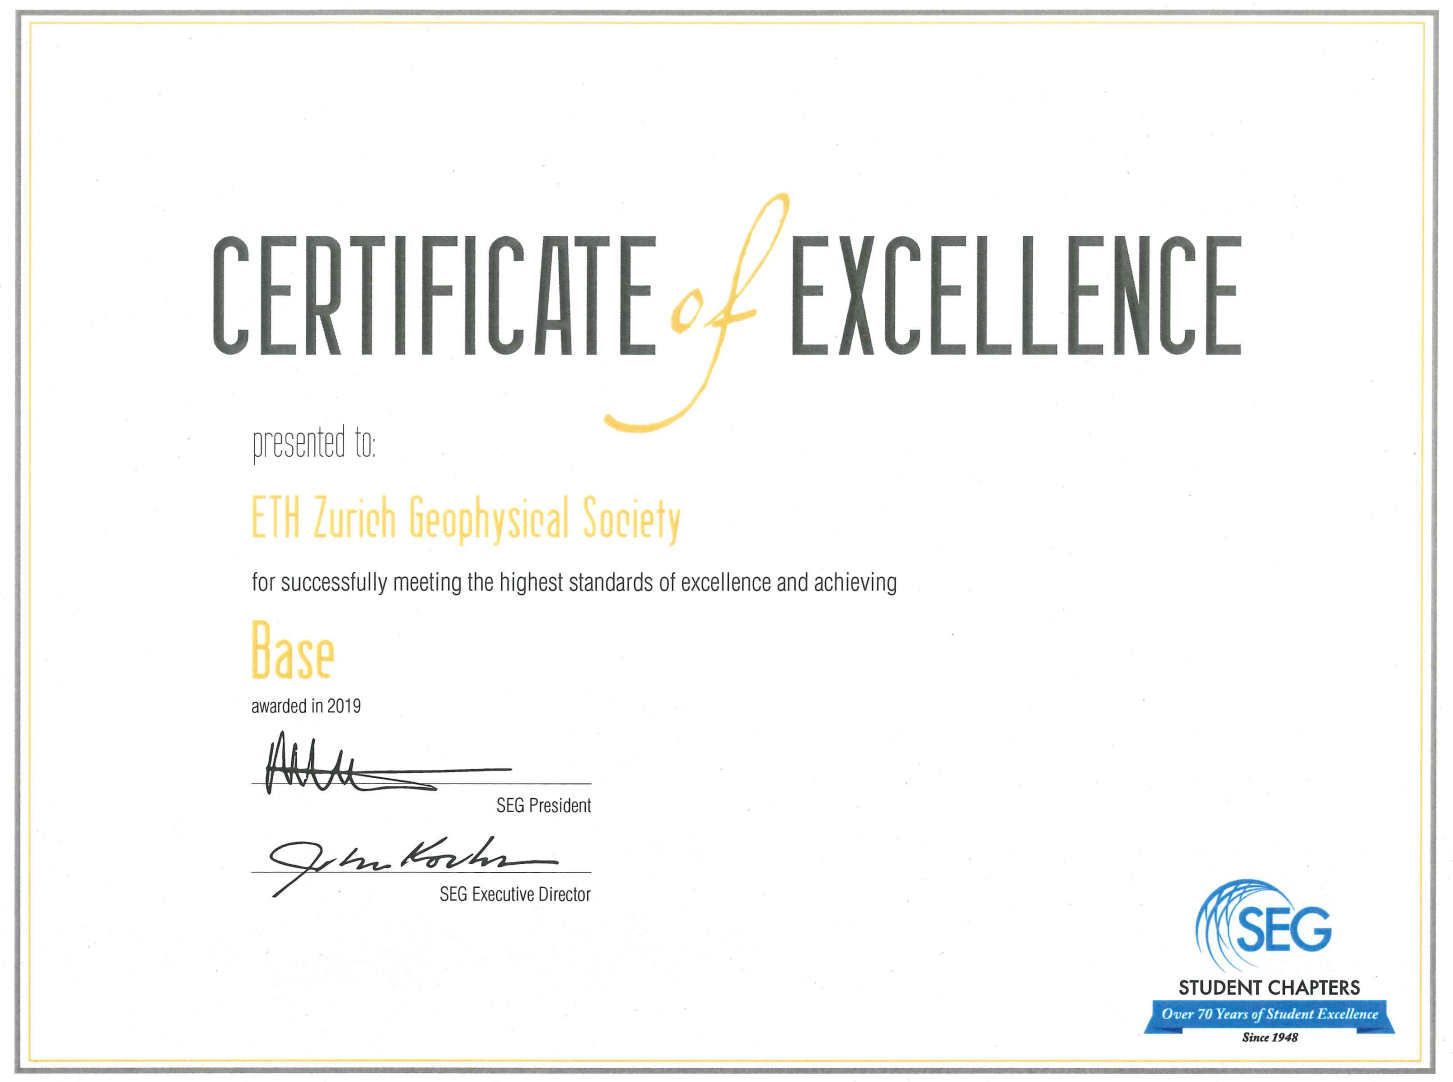 Enlarged view: SEG certificate